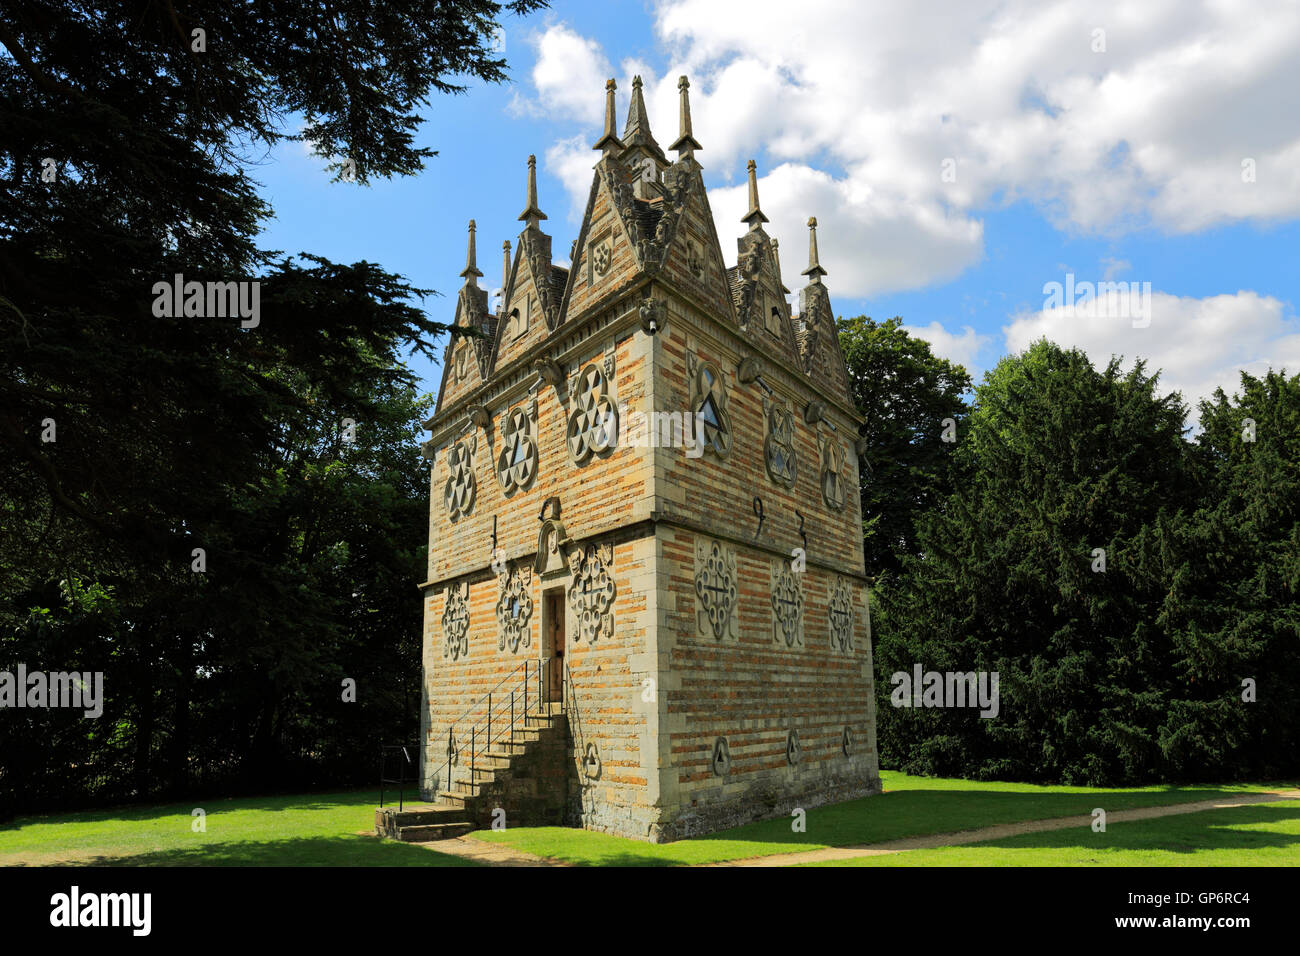 The Rushton Triangular Lodge Folly, built in 1592 by Sir Thomas Tresham, Rushton village, Northamptonshire, England. Stock Photo